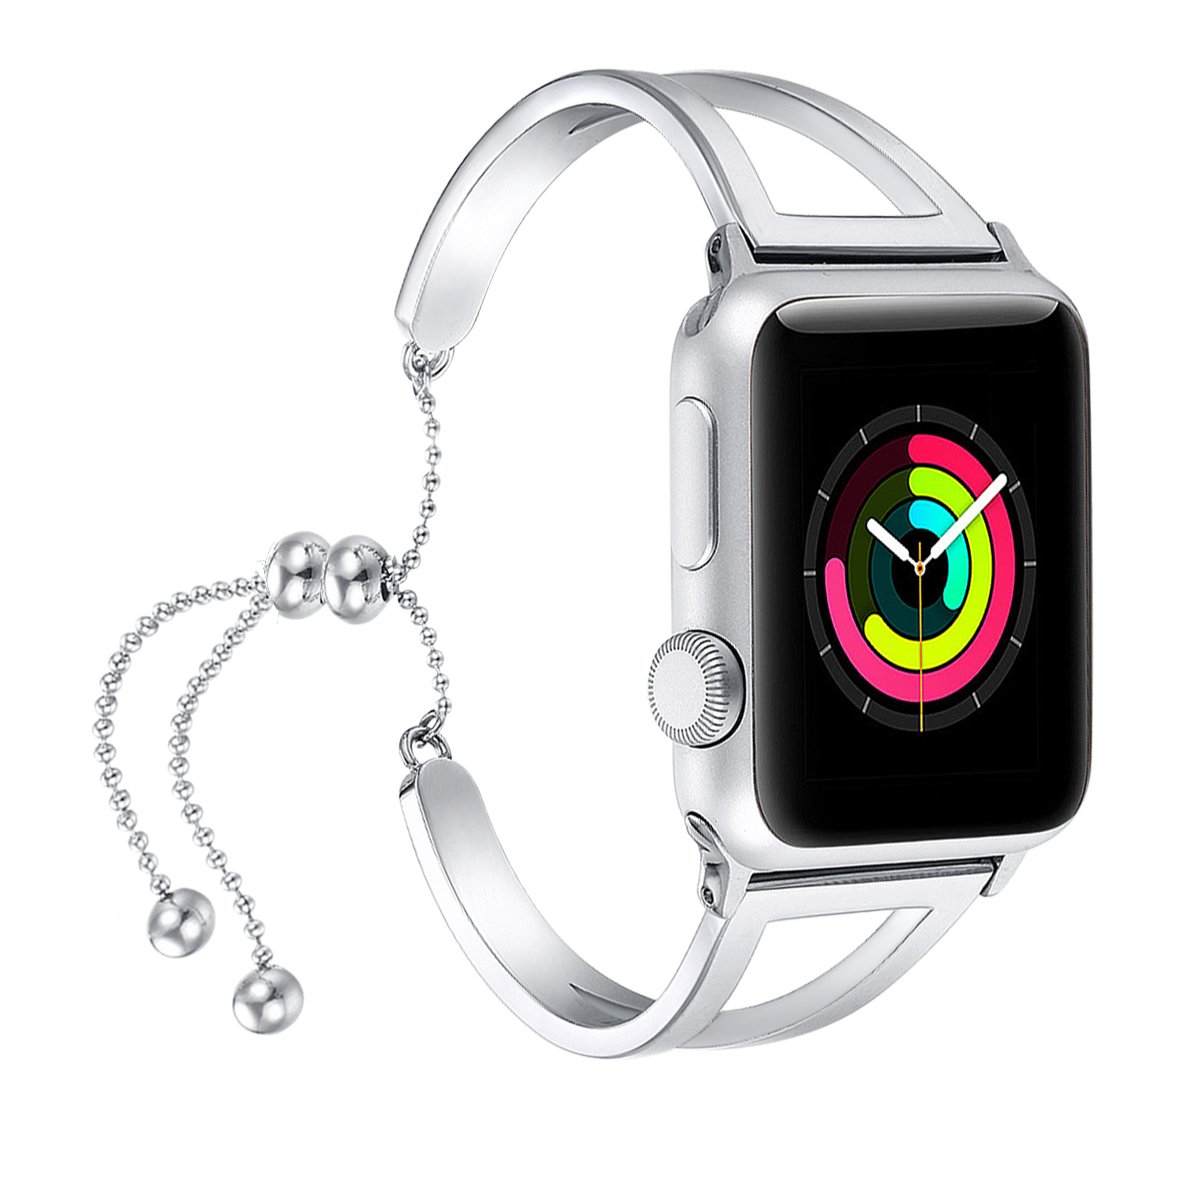 fastgo Apple Watch Bracelet